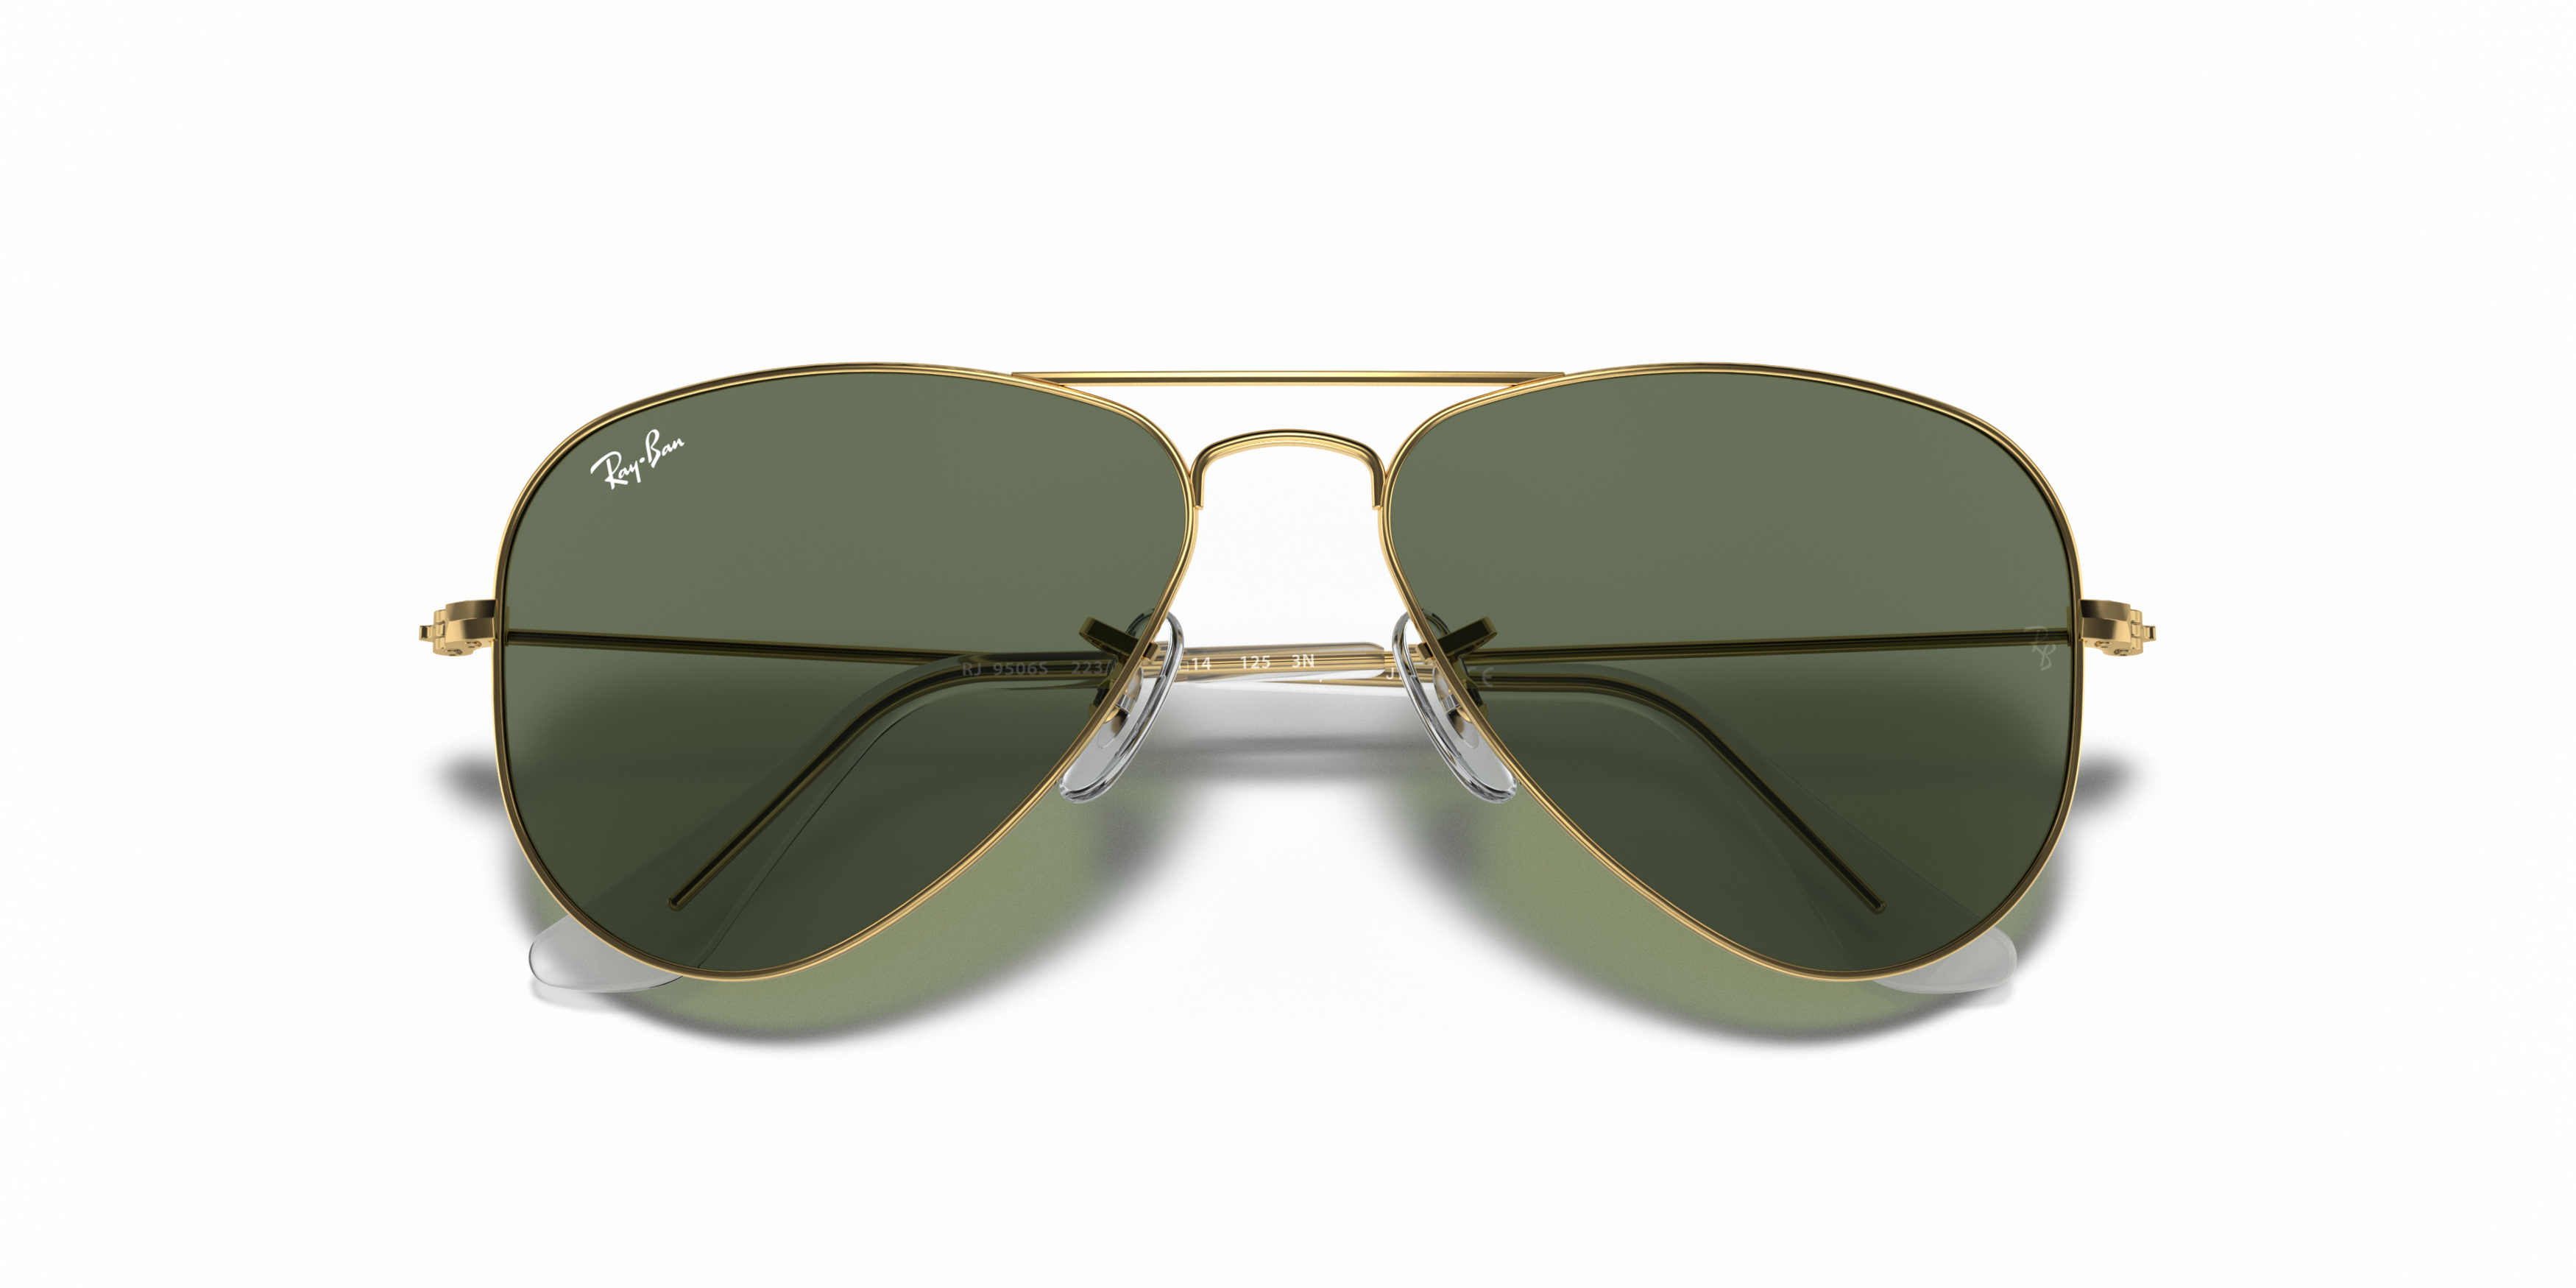 Folded Ray-Ban RJ9506S Children's Sunglasses Green / Gold